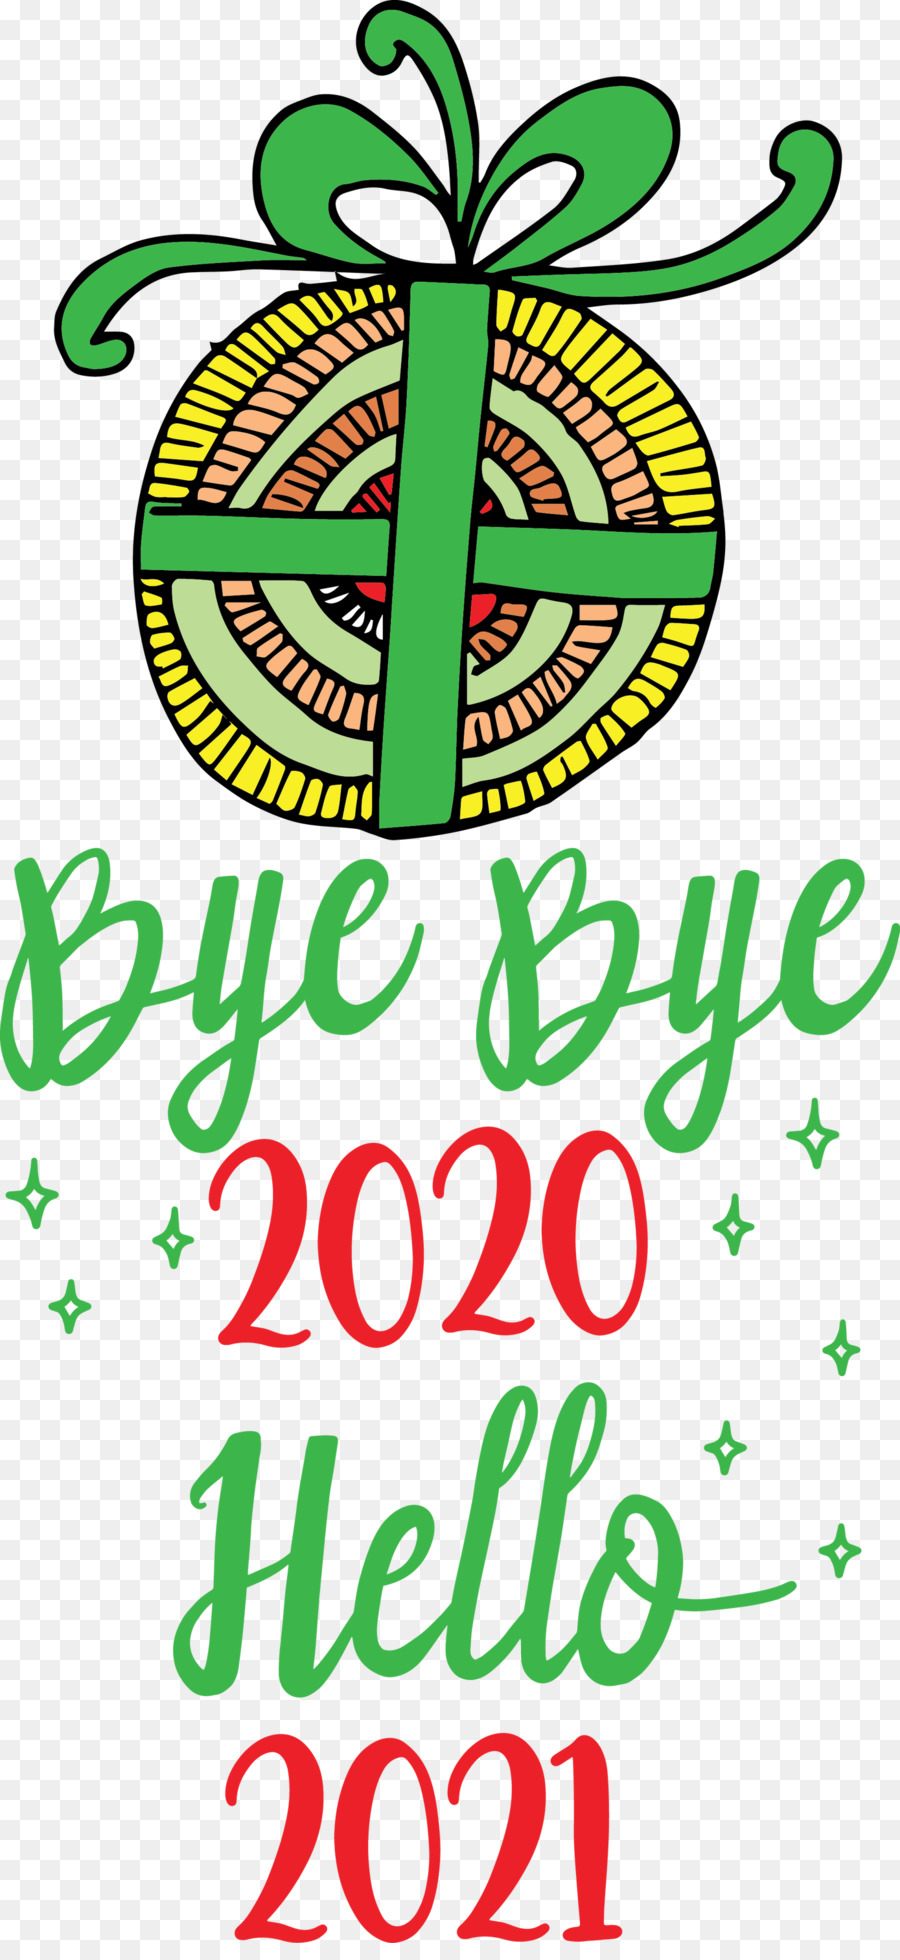 Hello 2021 Year Bye bye 2020 Year